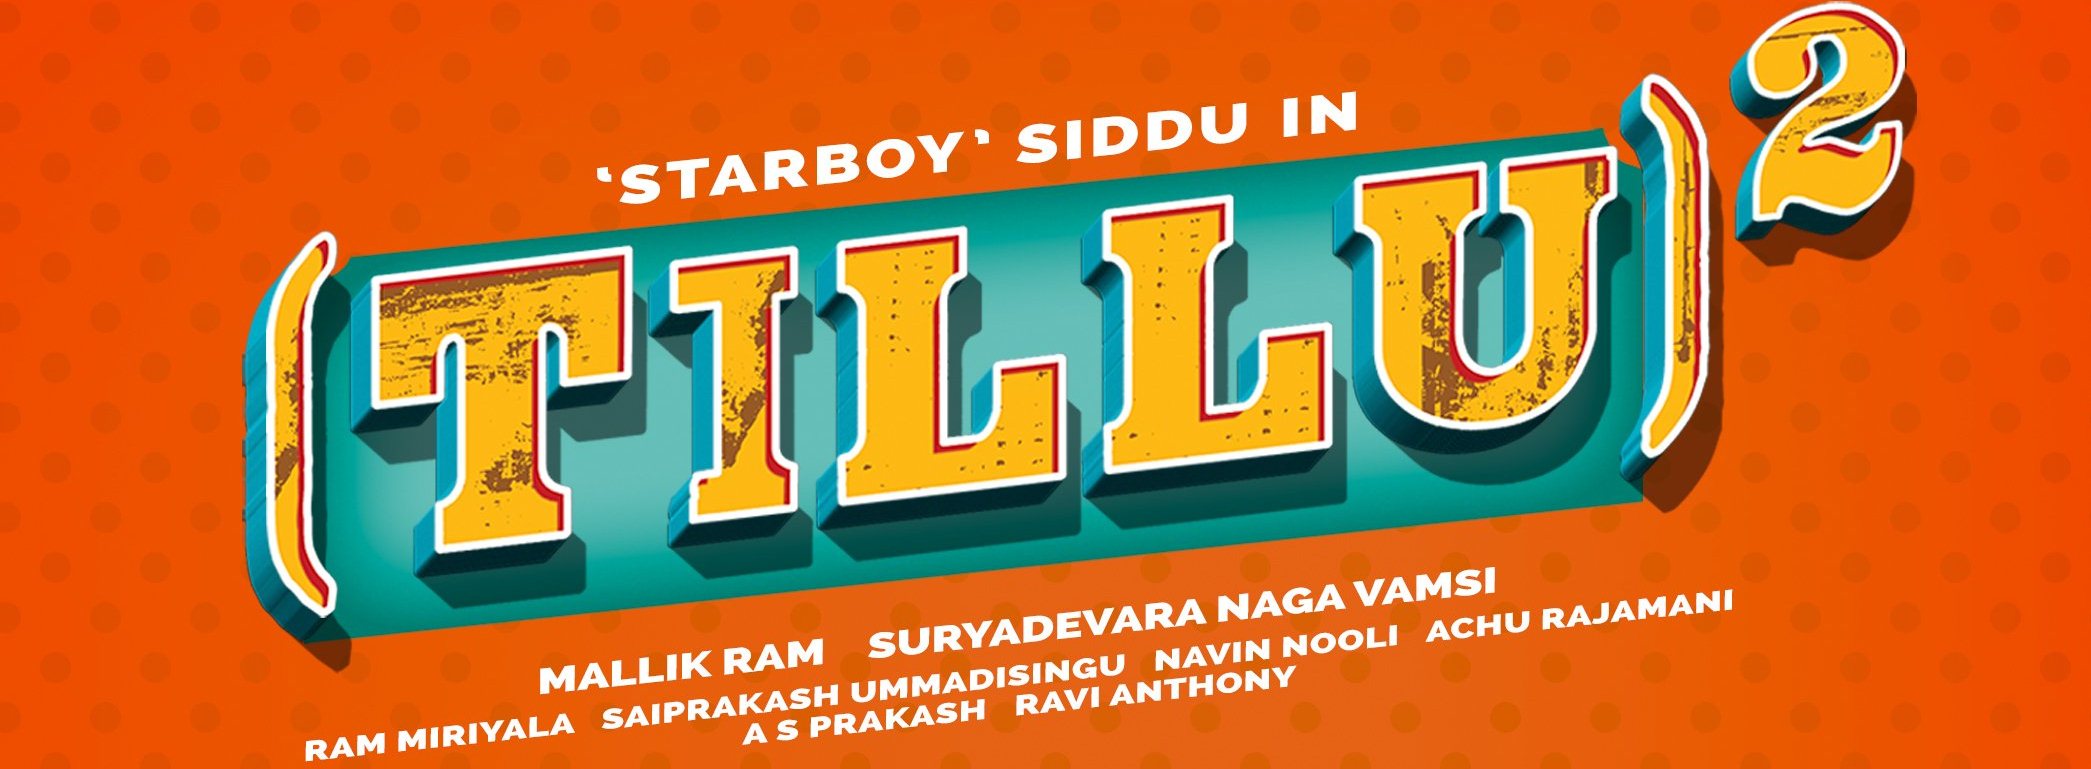 Tillu Square Movie 3 Days Share in Both Telugu States